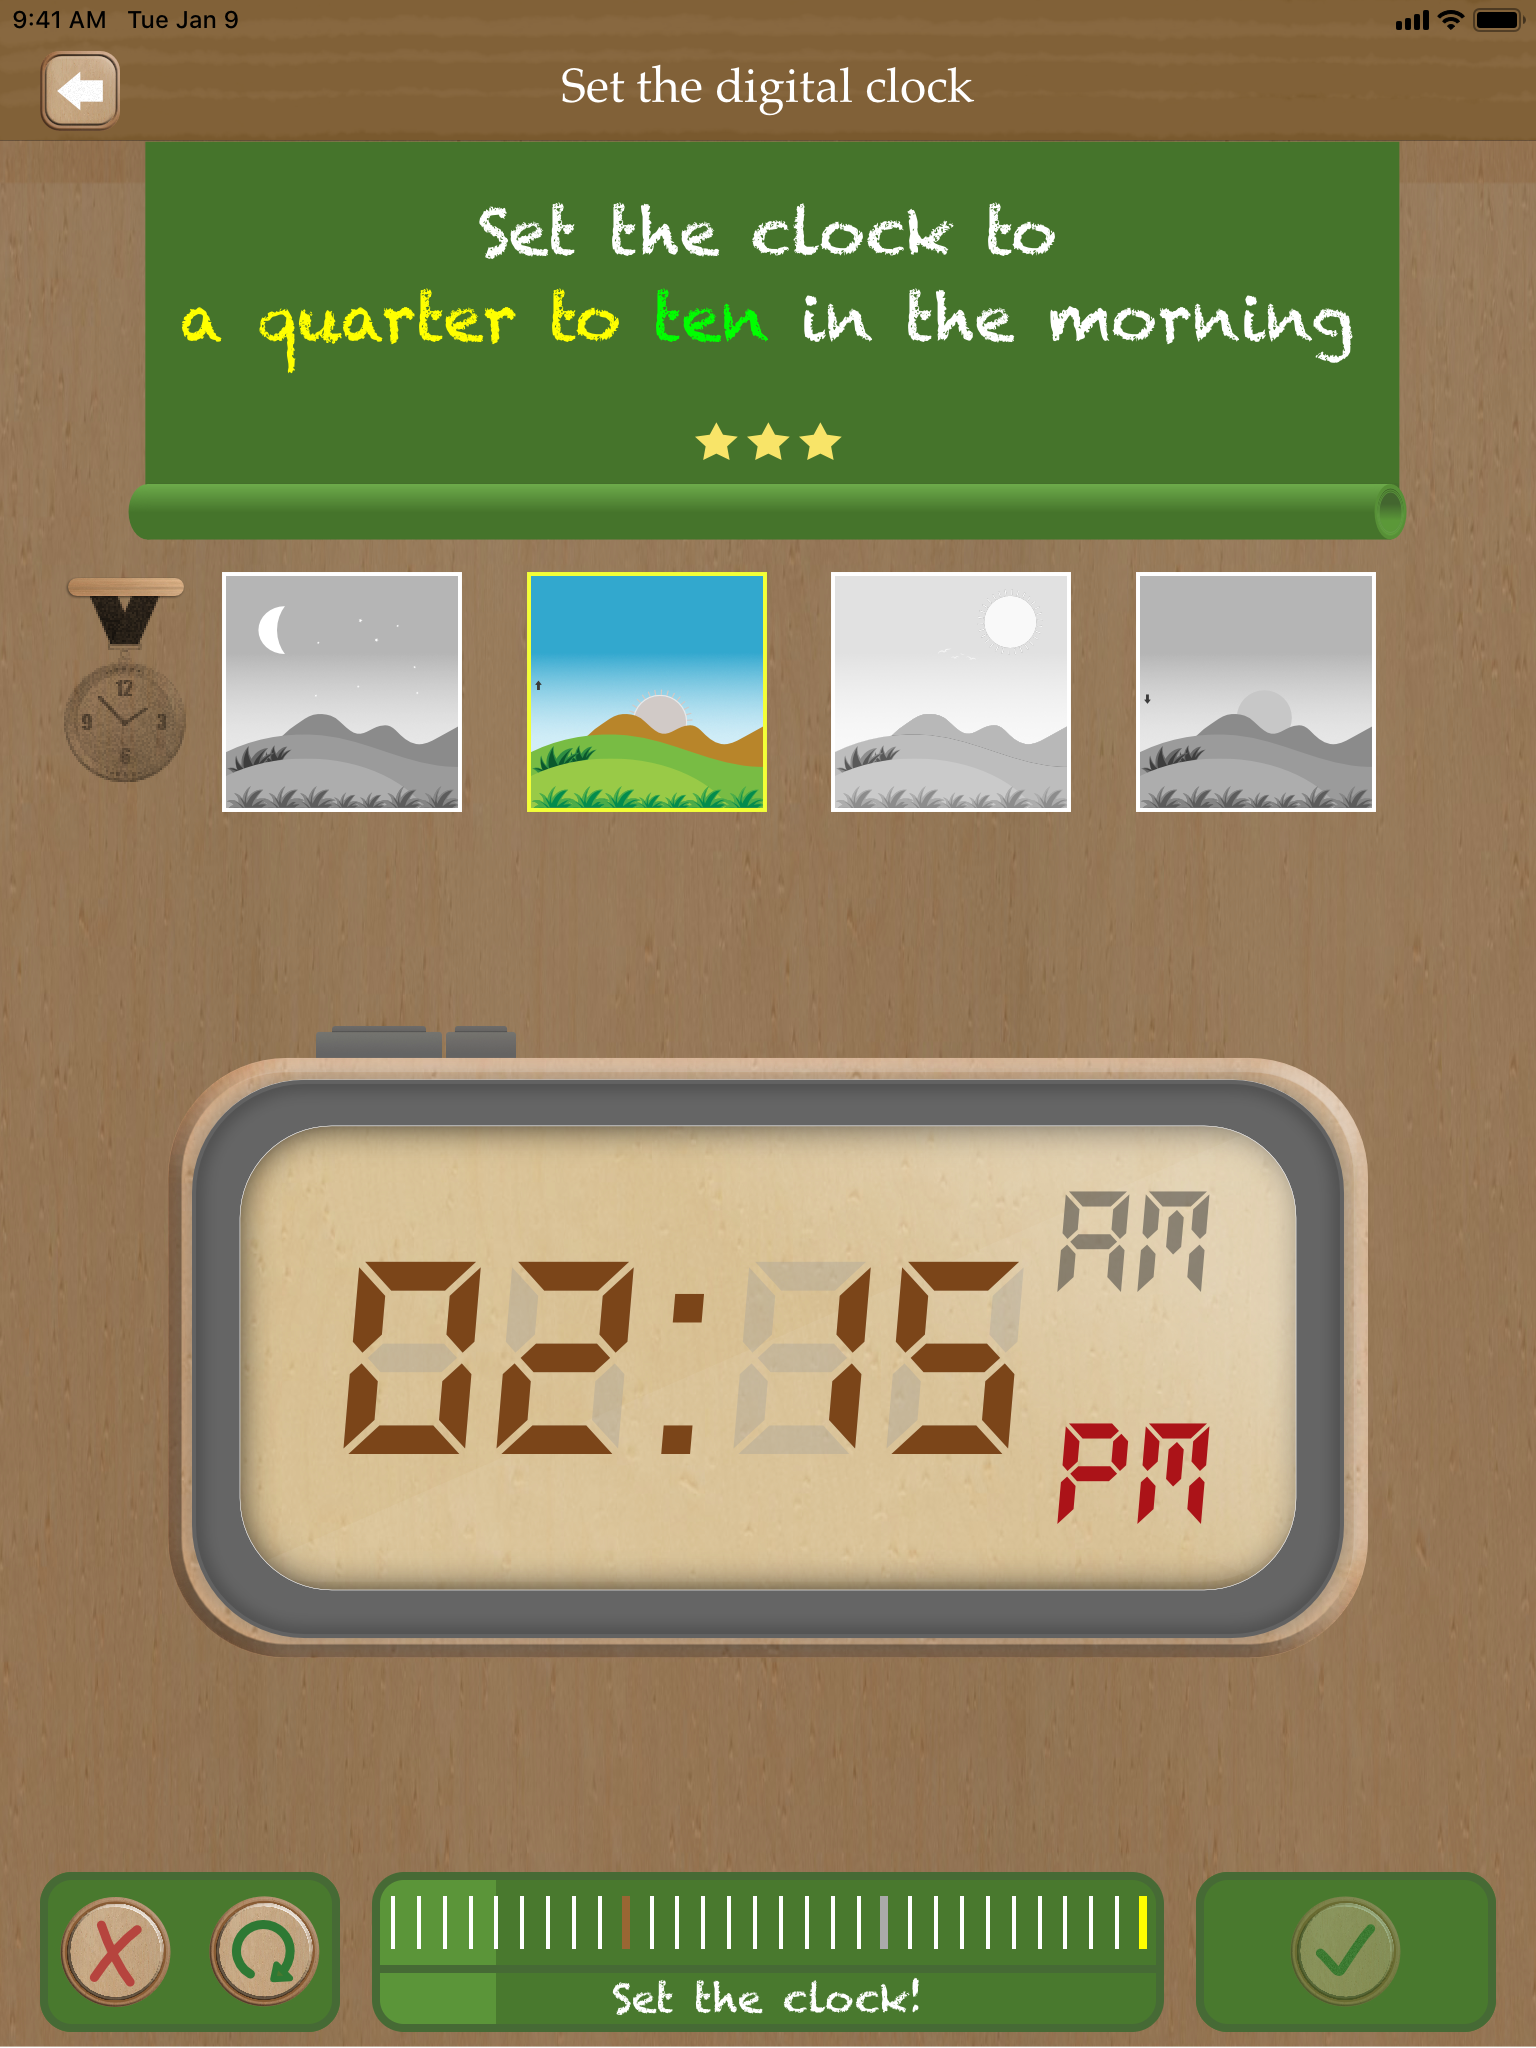 Thumbnail: Set the clock - telling time on iPad App - game type 'Set the clock - digital'